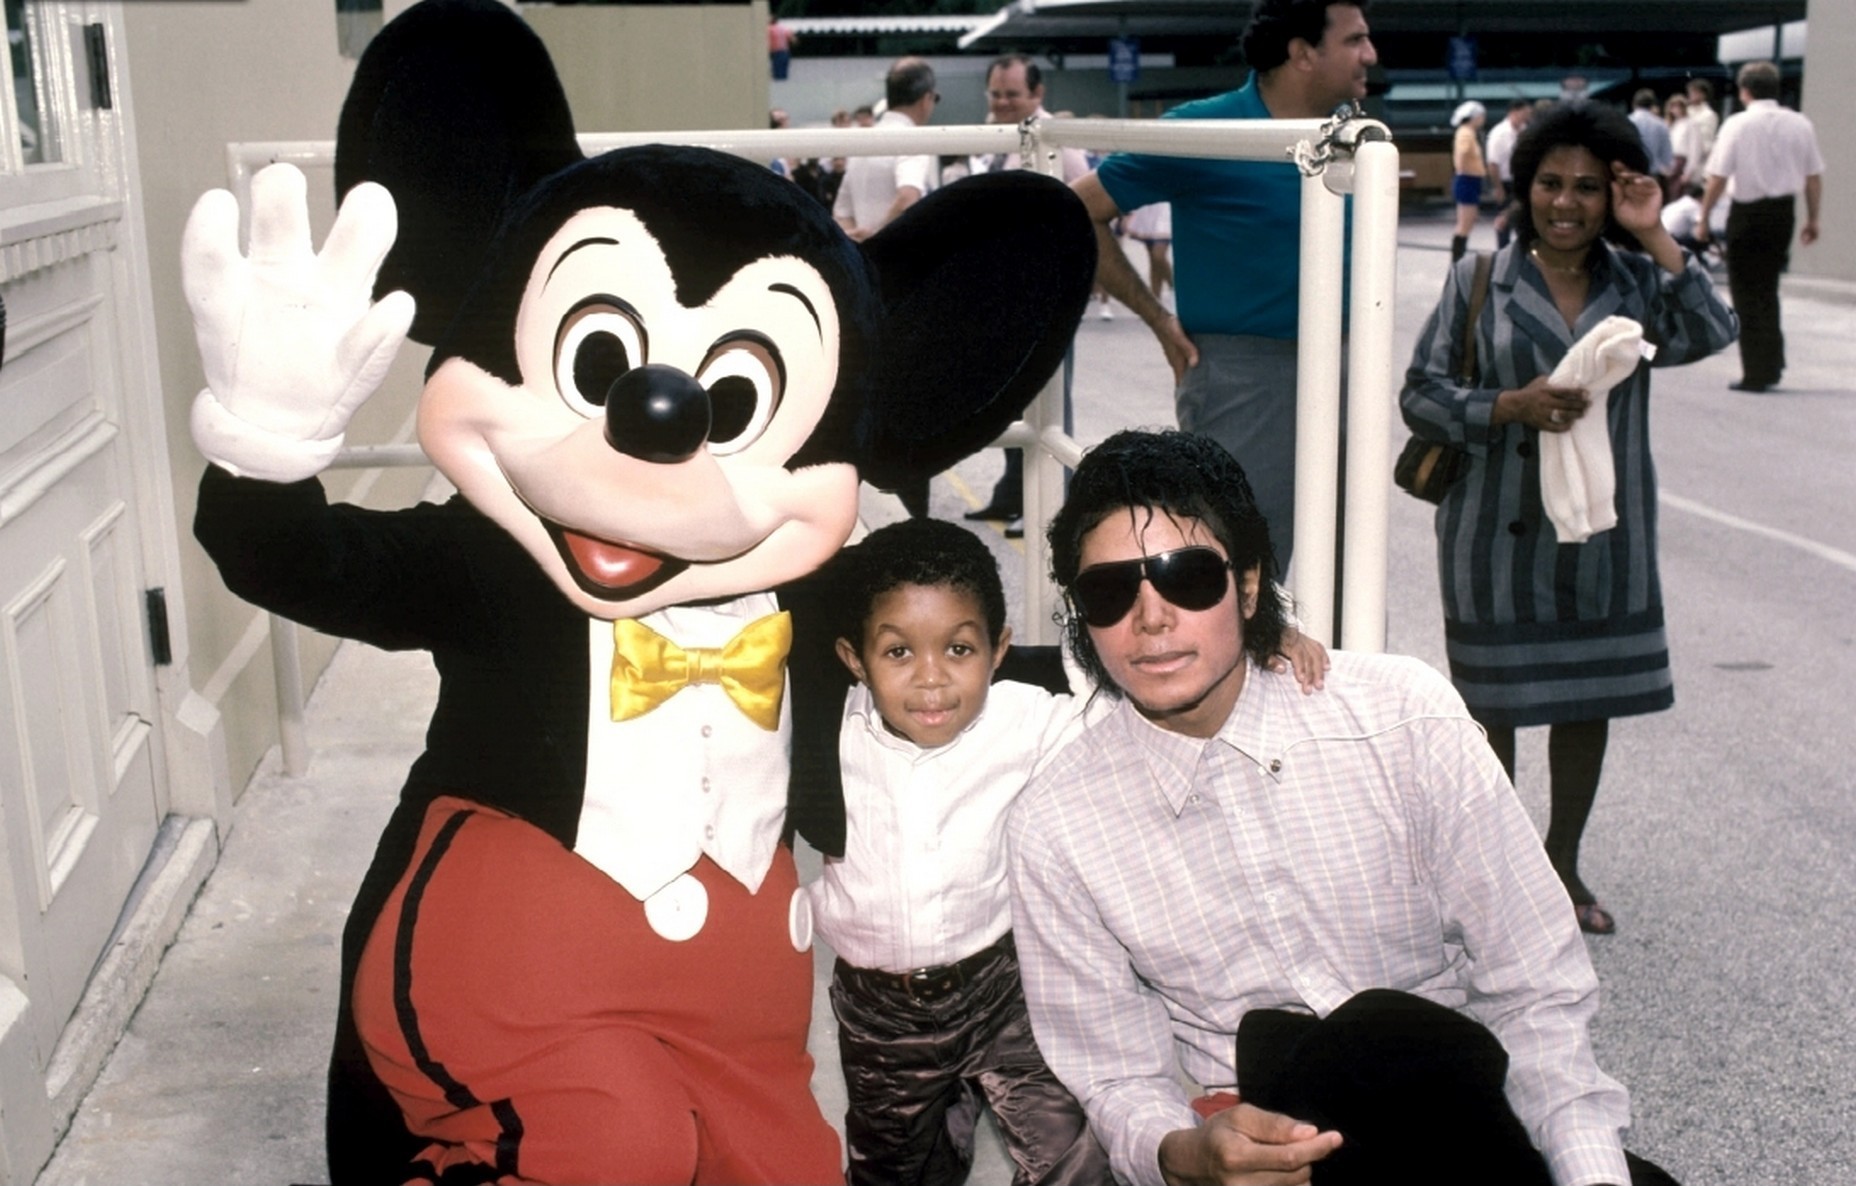 October-1984-Michael-Jackson-and-Emanuel-Lewis-at-Disney-World-michael-jackson-7429349-1856-1186.jpg